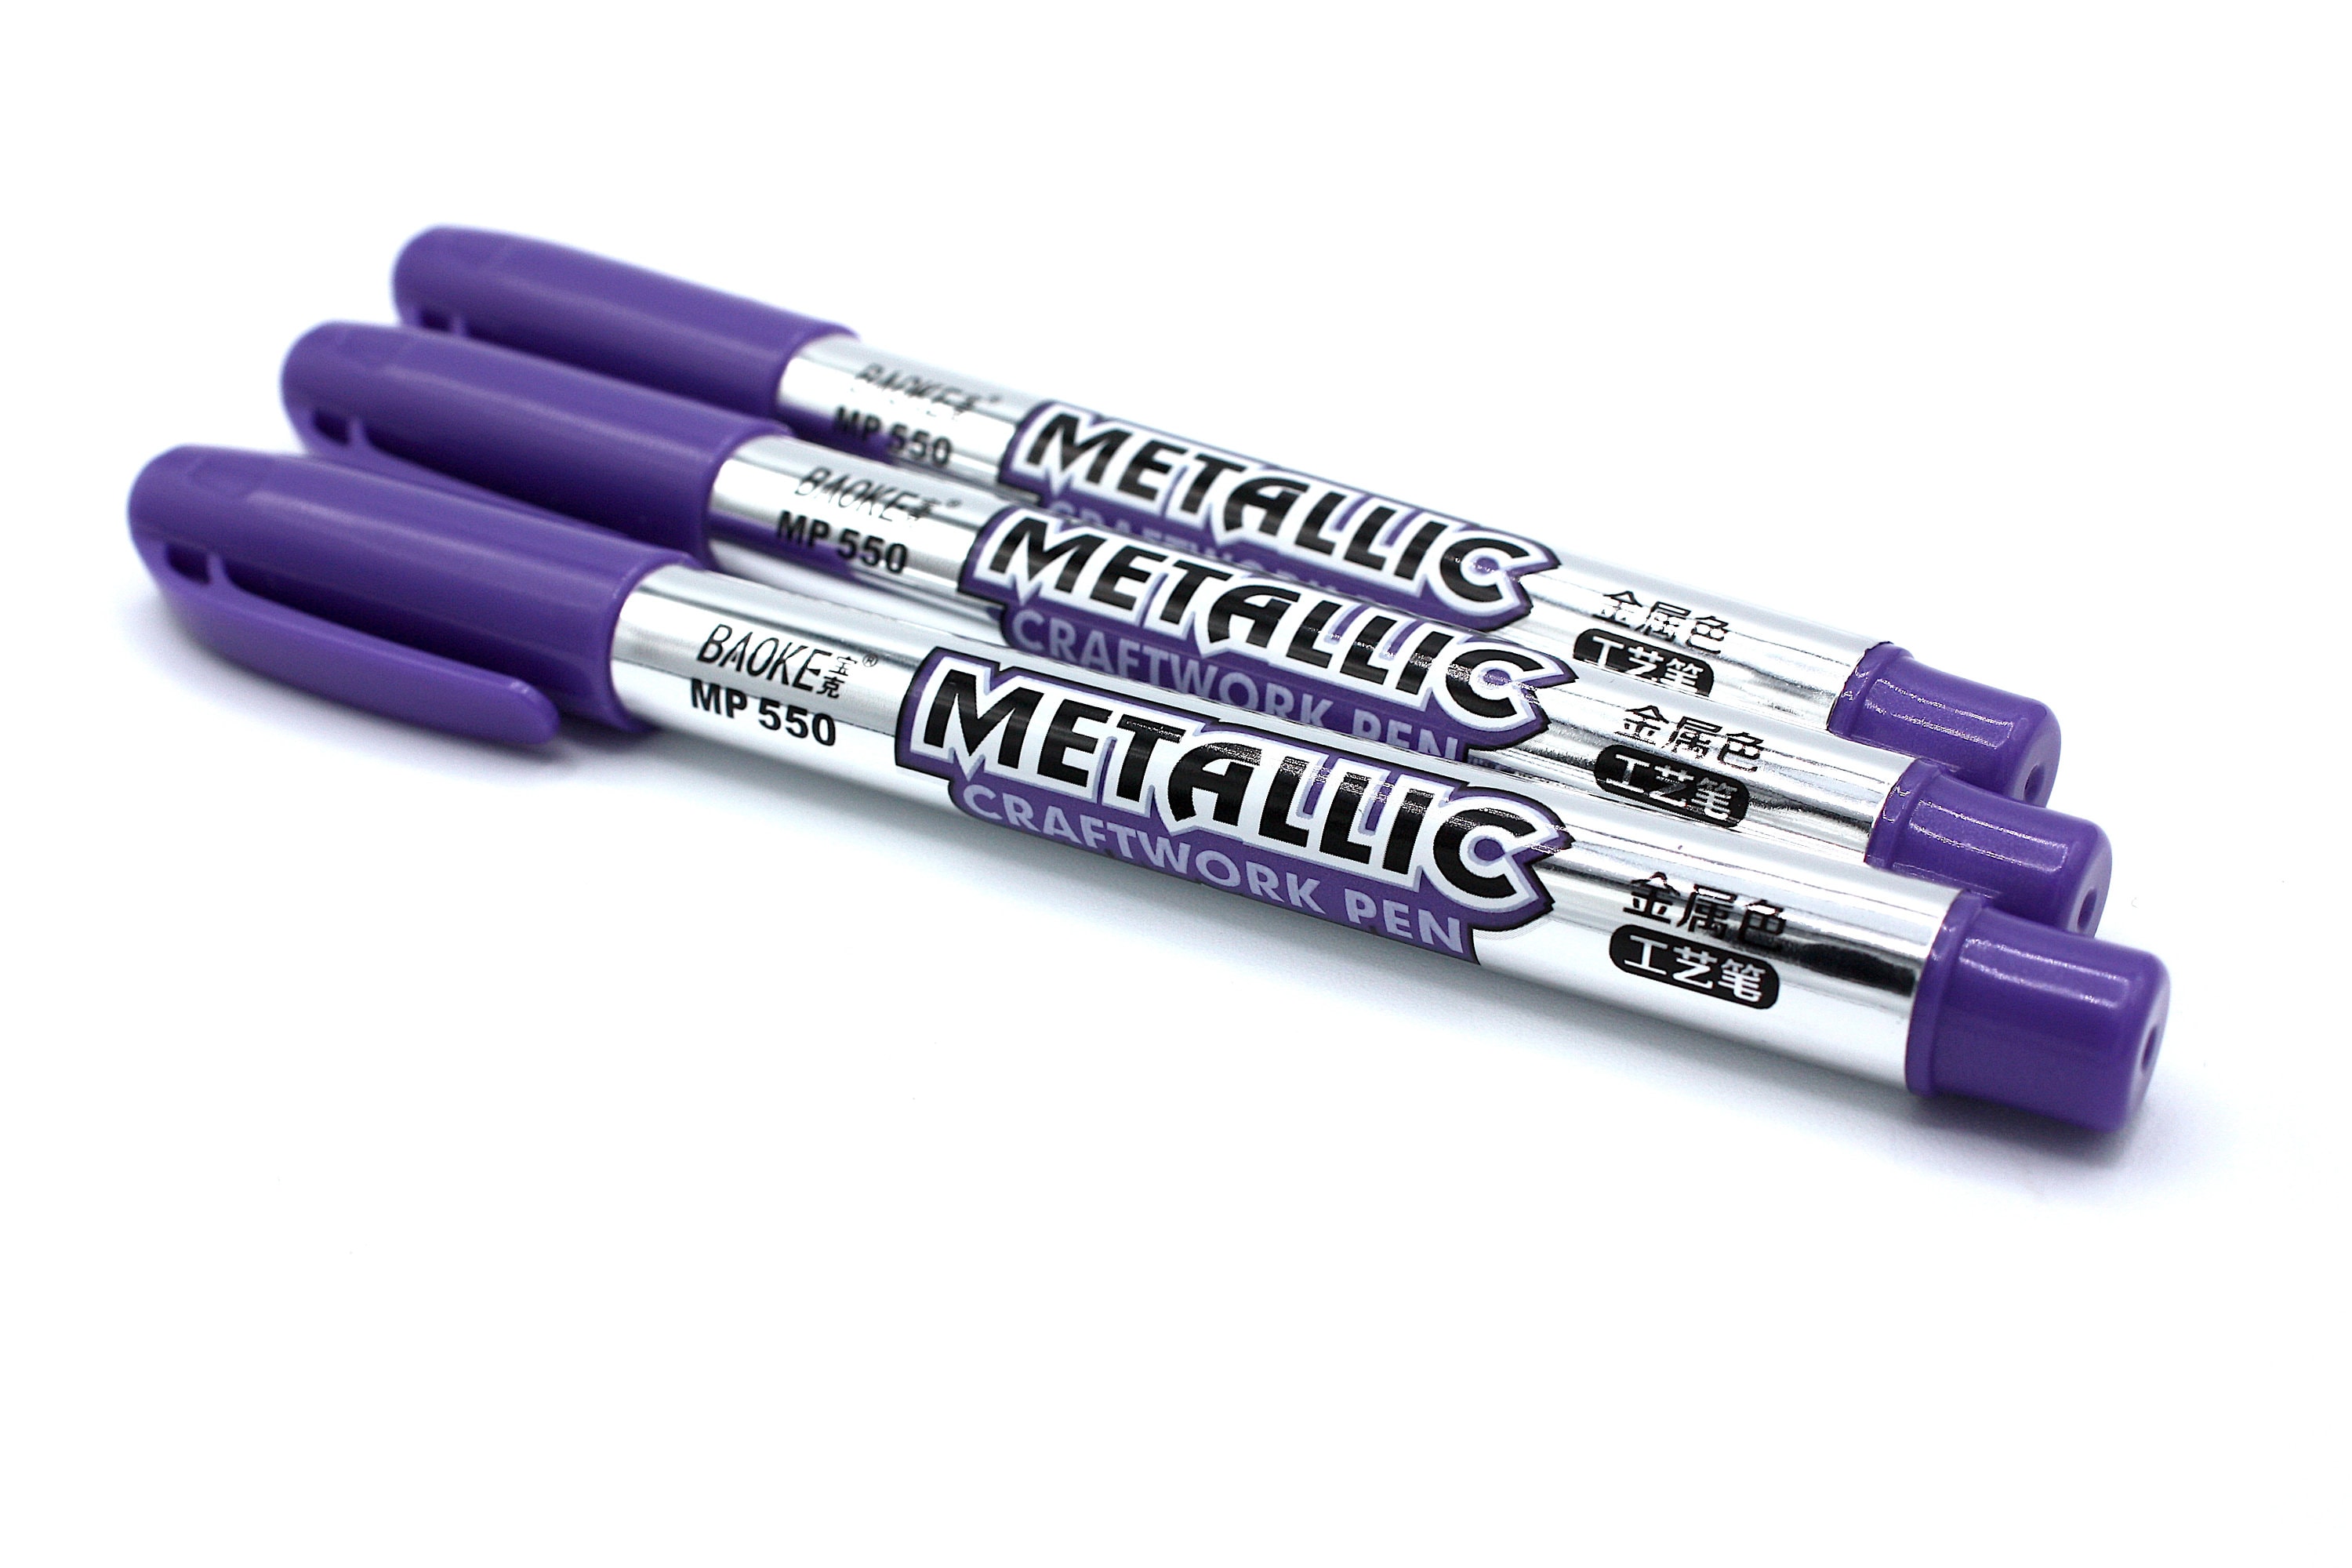 Self-outline Metallic Markers, 8 Colors Outline Marker Double Line Pen 